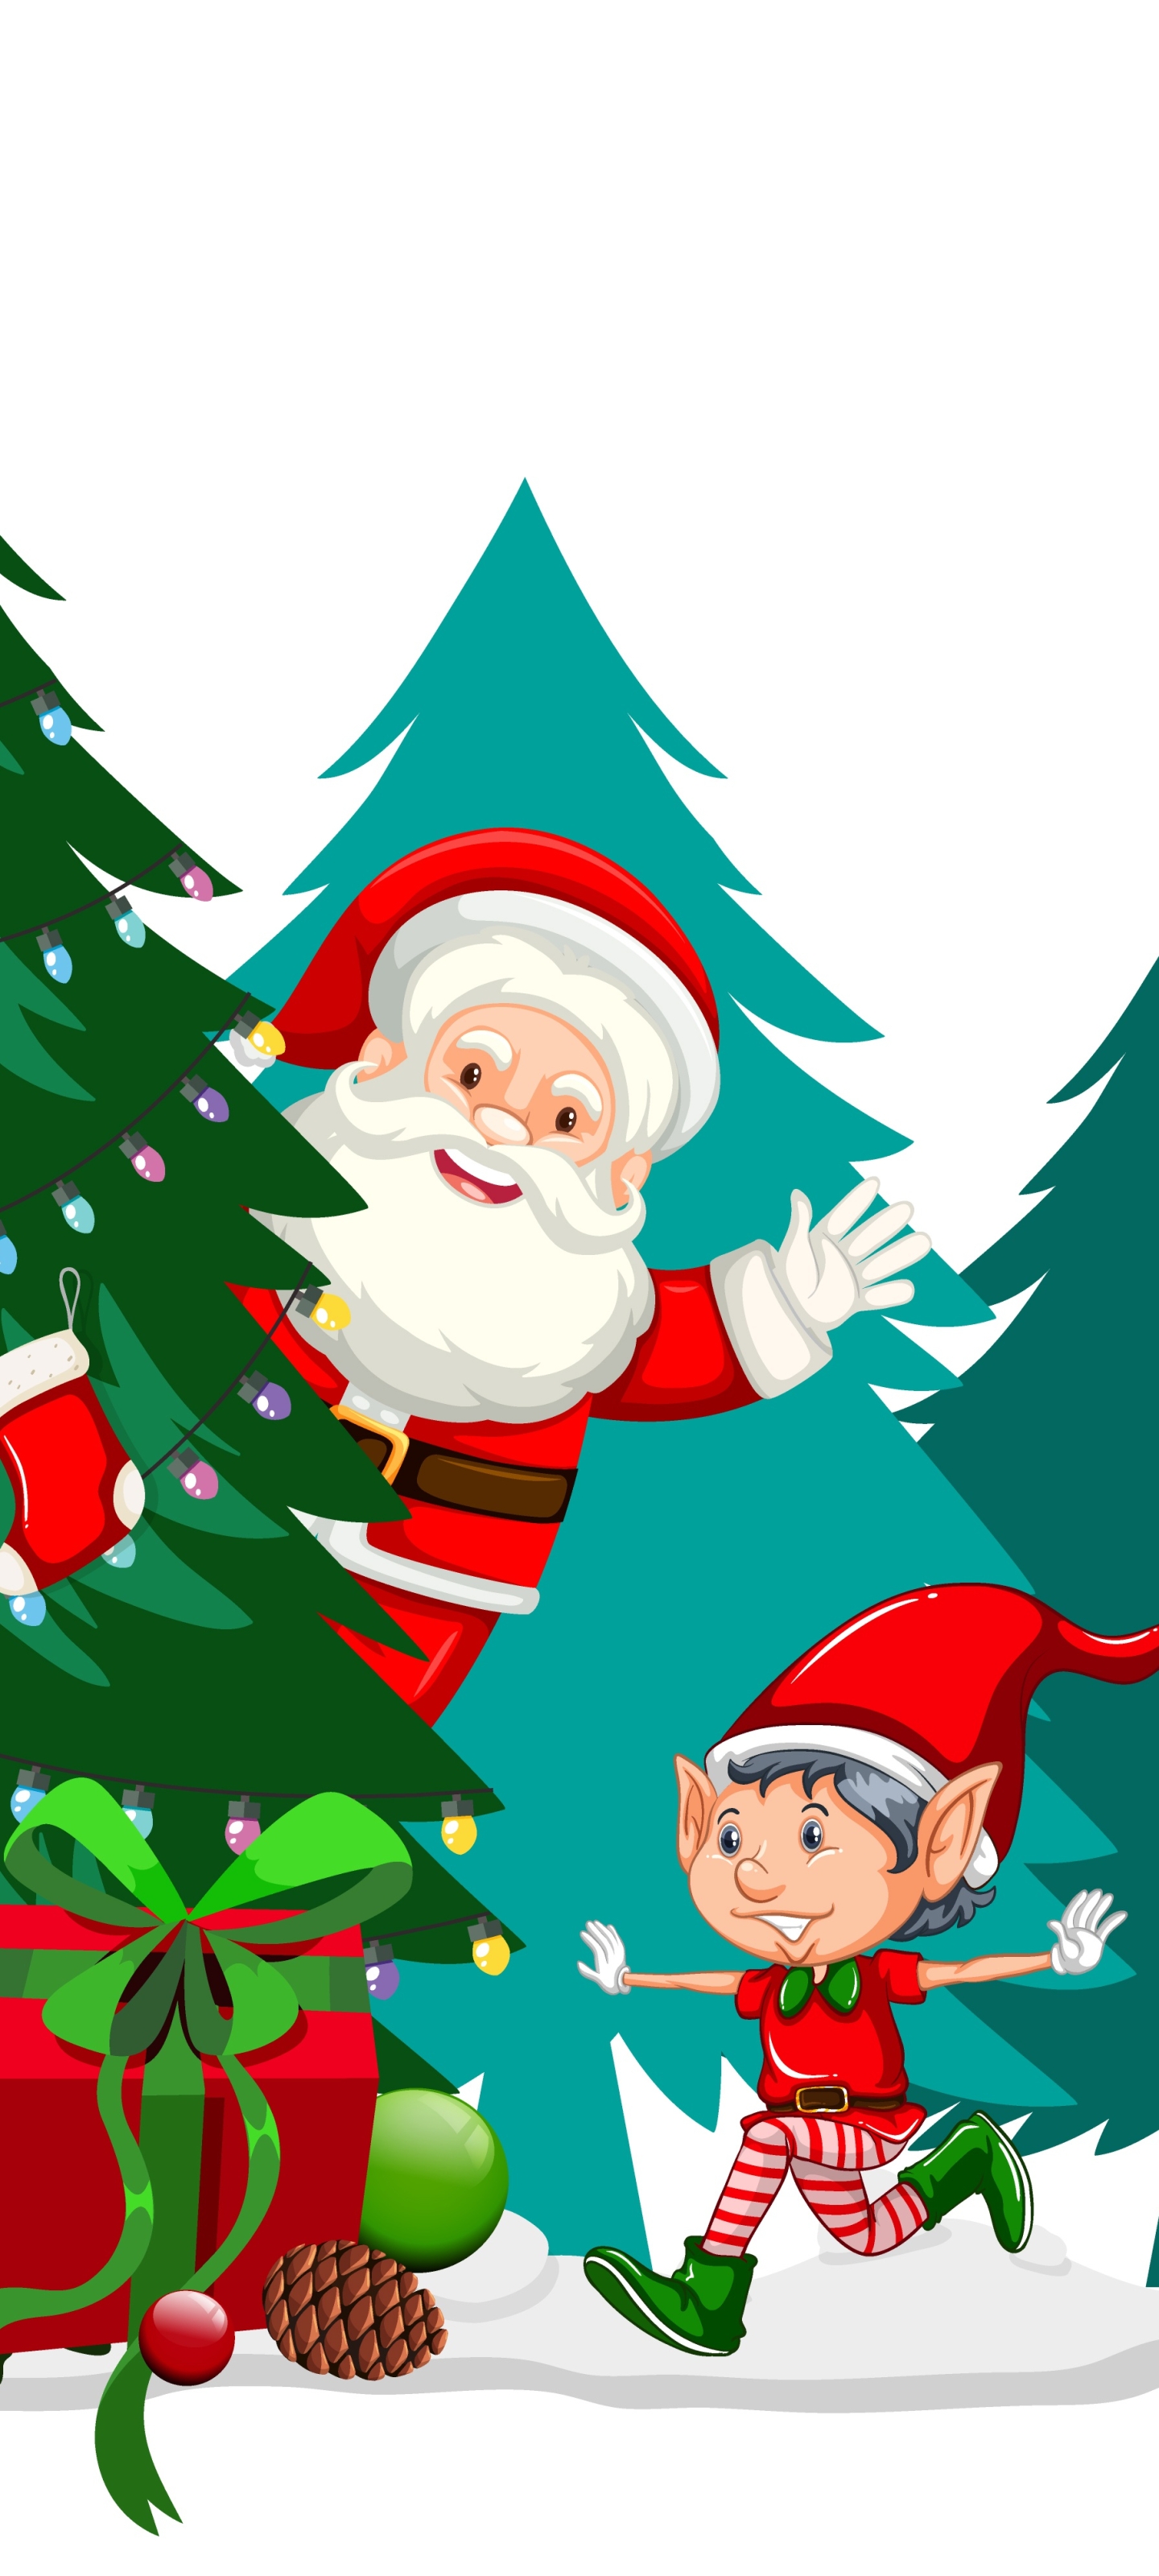 Baixar papel de parede para celular de Papai Noel, Natal, Duende, Elfo, Feriados gratuito.